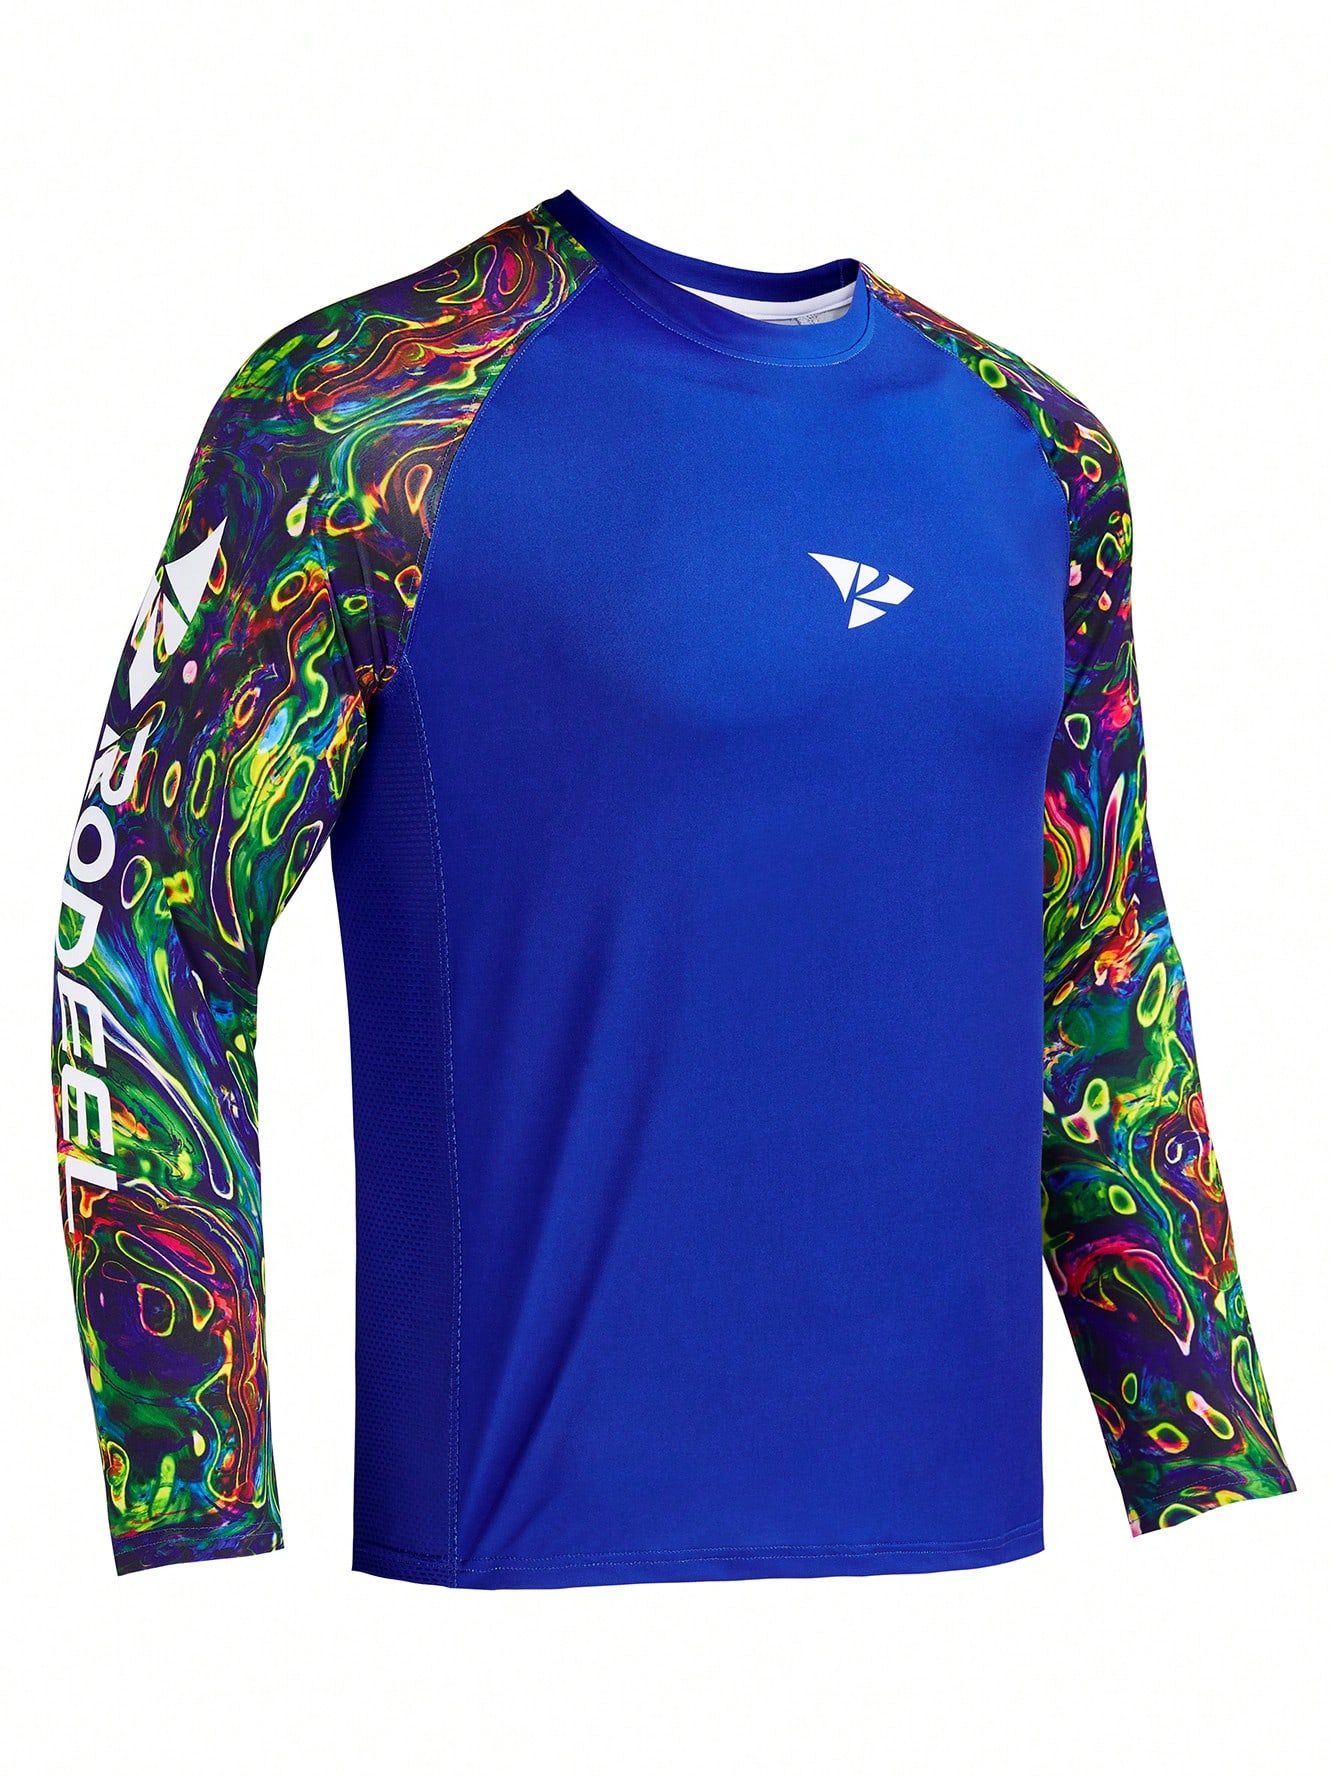 RODEEL Мужская рубашка с защитой от солнца, темно-синий одежда daiwa футболка для рыбалки мужская дышащая быстросохнущая одежда для рыбалки daiwa летняя спортивная рубашка с коротким рукавом футбо